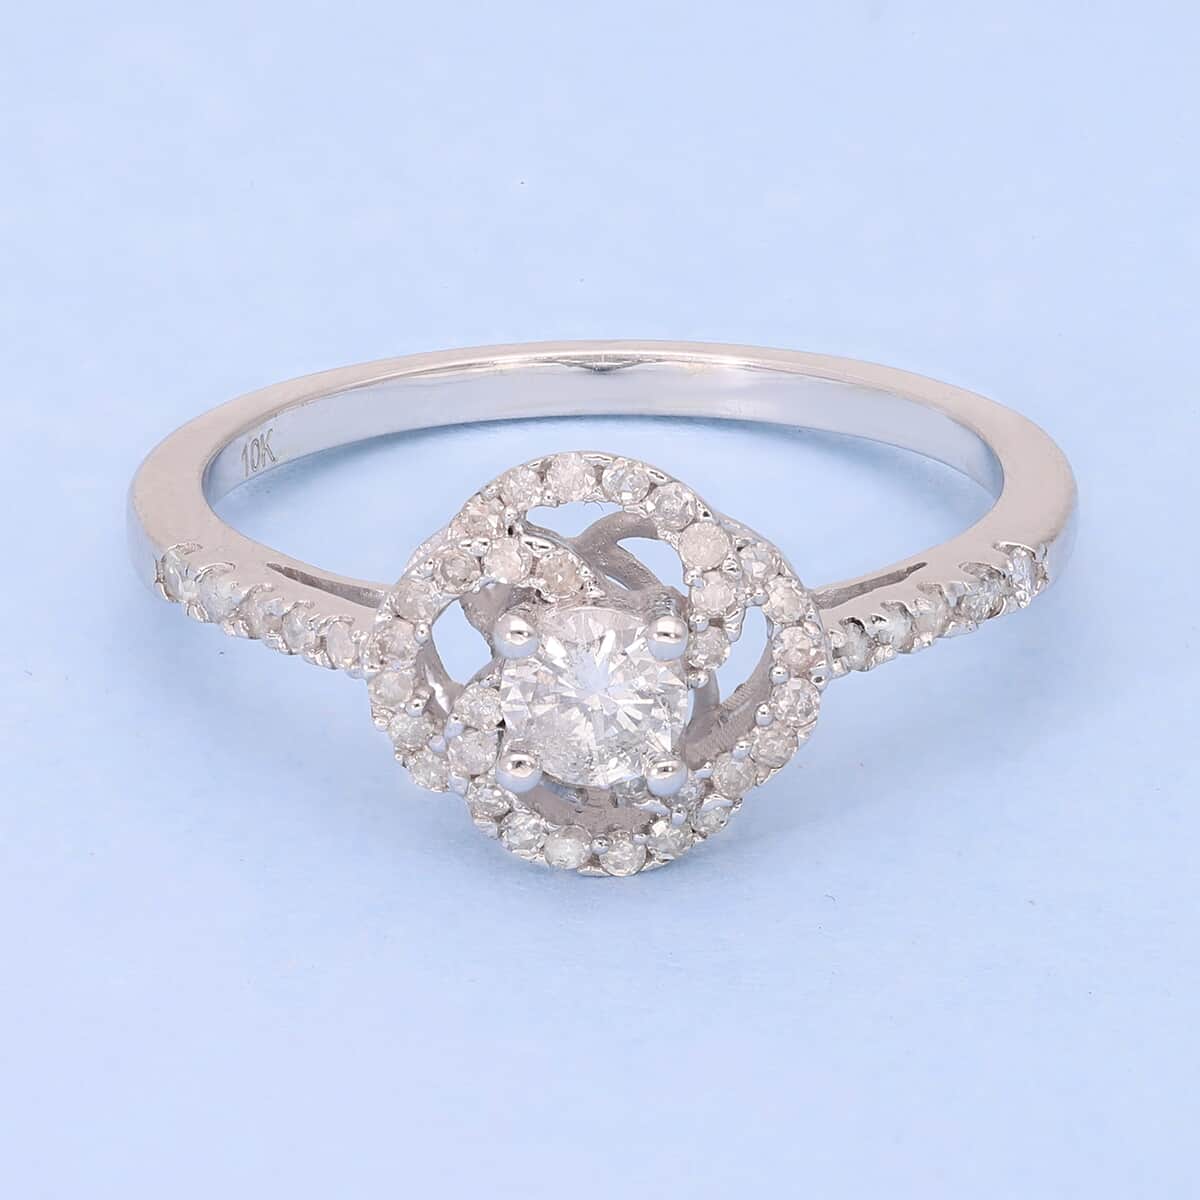 Luxoro 10K White Gold G-H I2-I3 Diamond Ring (Size 10.0) 0.50 ctw image number 1